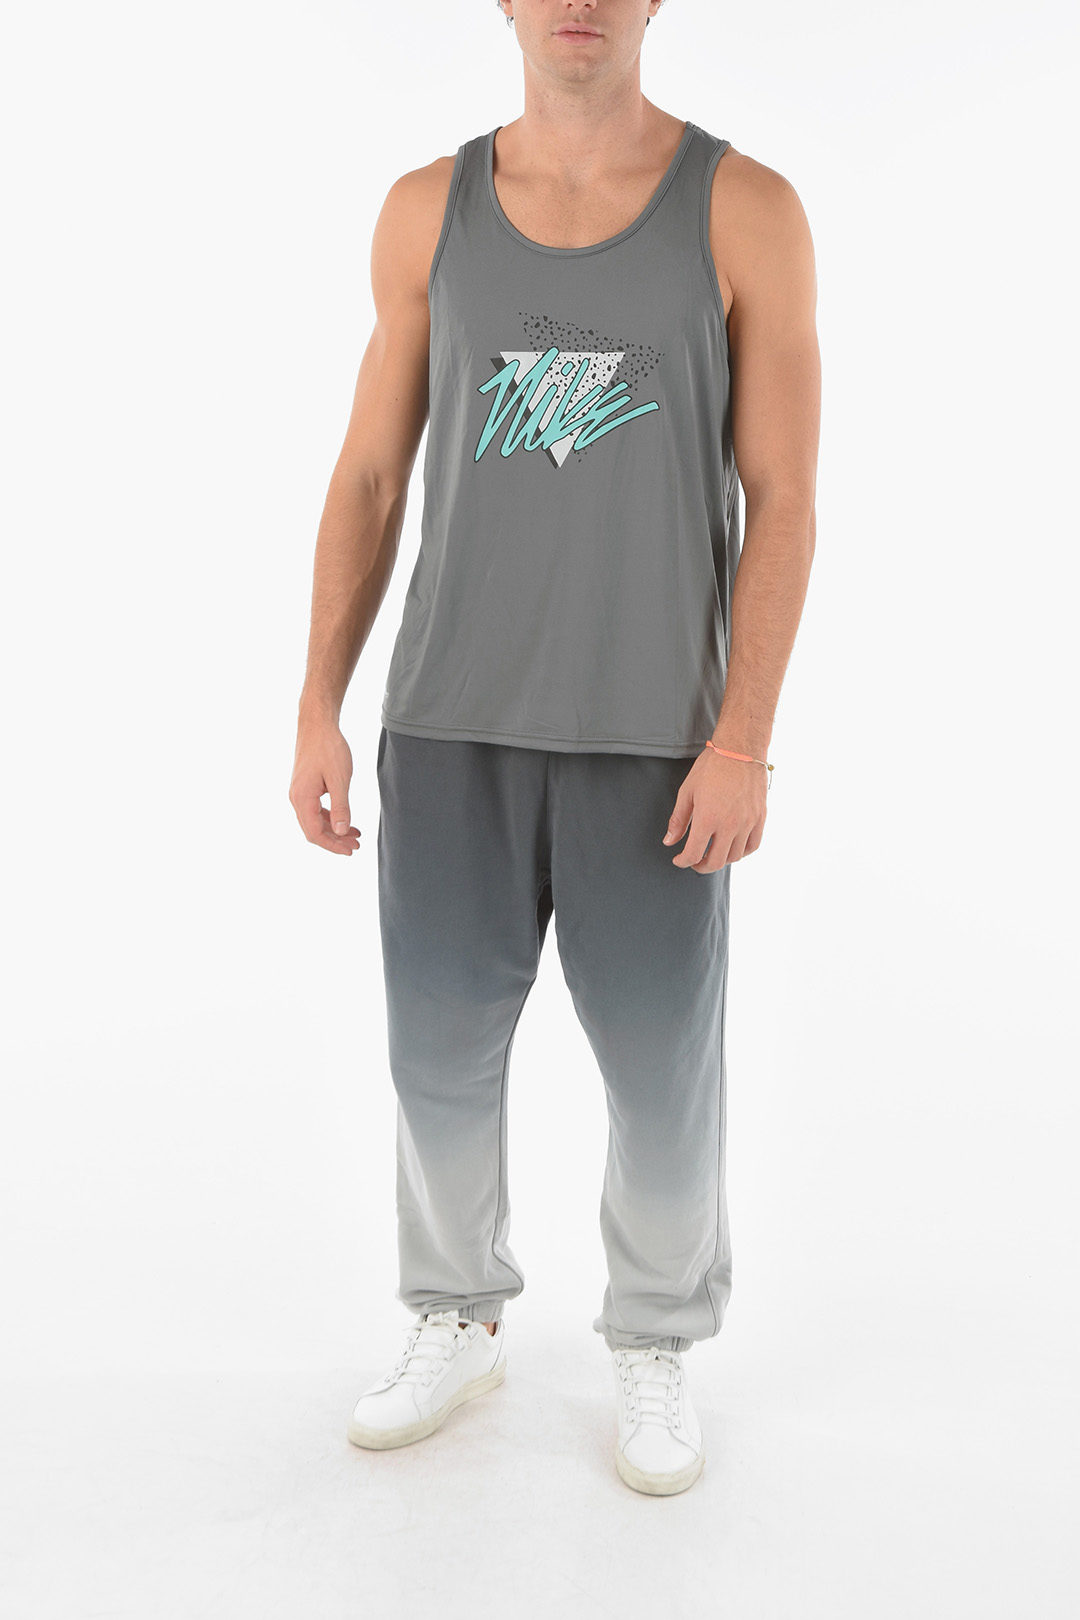 Nike SWIM Tank top with Logo-Print men - Glamood Outlet